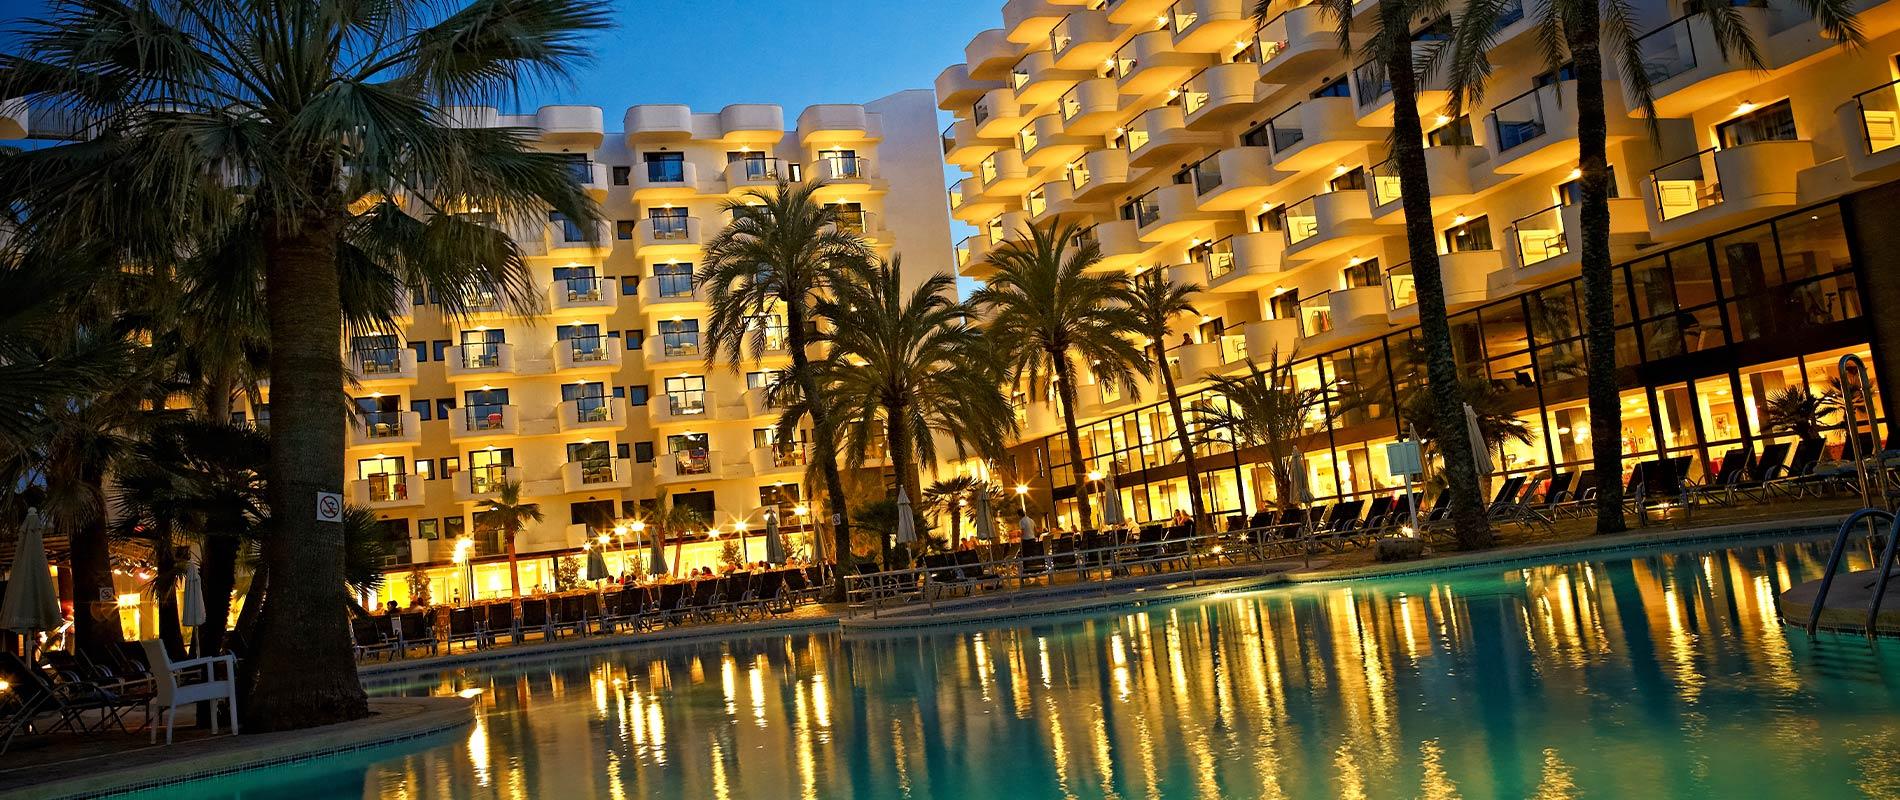 Protur Palmeras Playa Hotel - 4 Estrellas -  Sa Coma, Mallorca